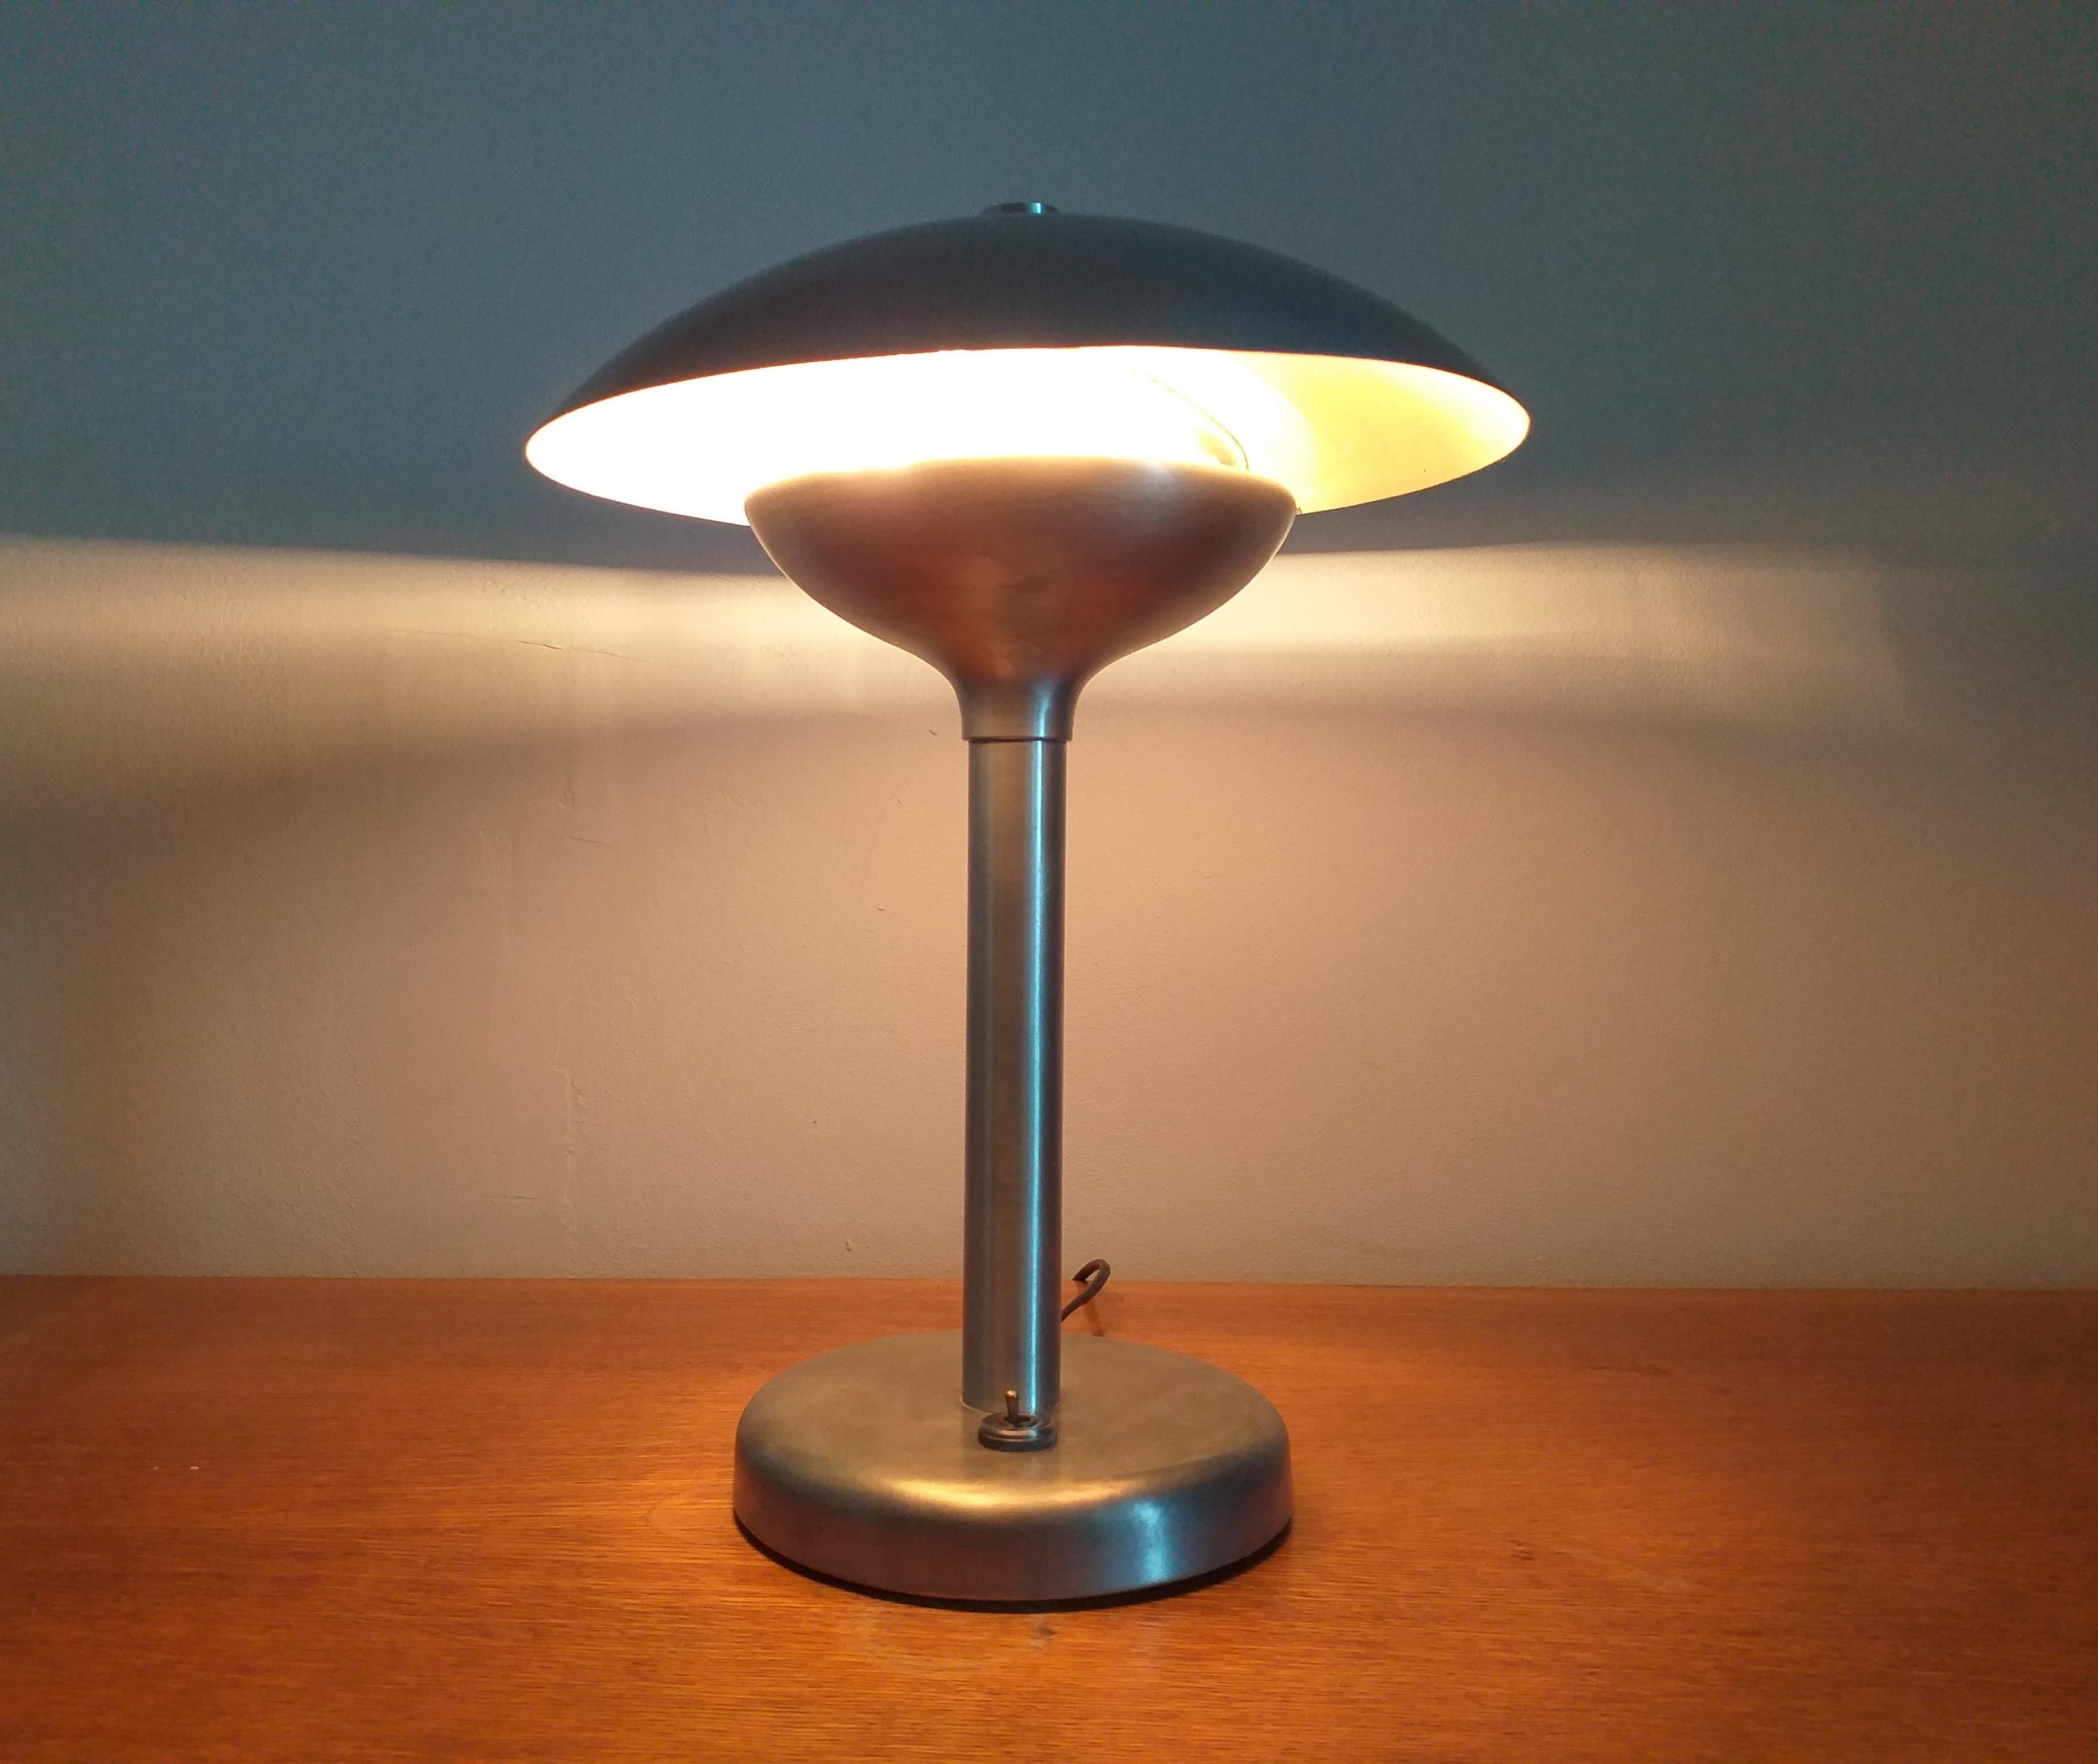 Art Deco Table Lamp, Franta Anyz, Functionalism, Bauhaus, 1930s 6